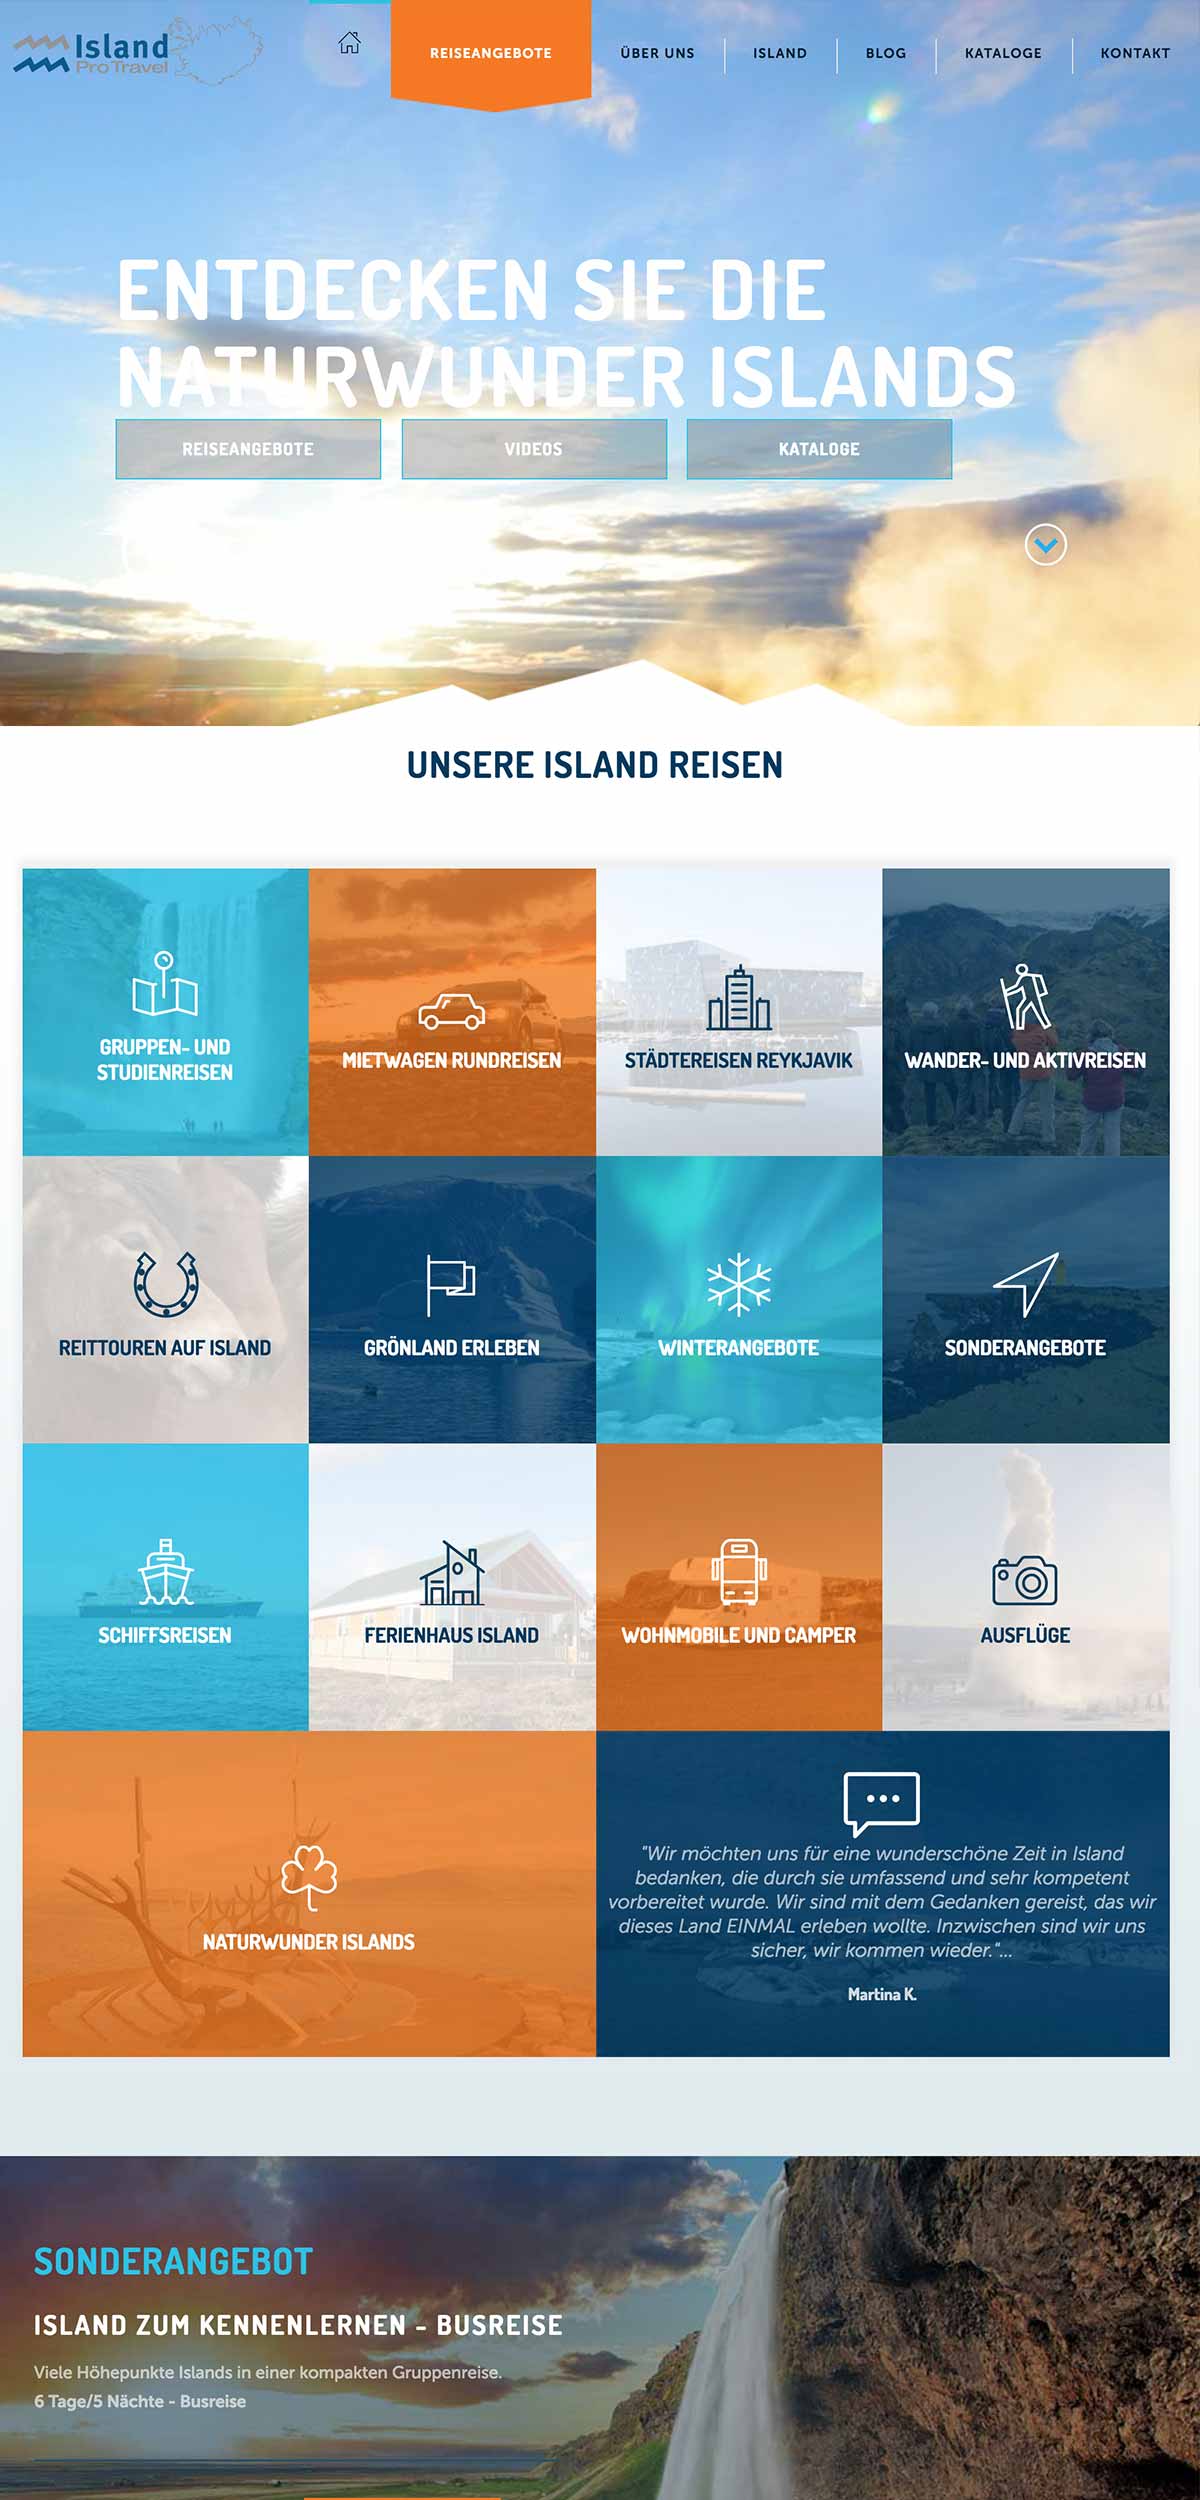 Reiseveranstalter Island ProTravel